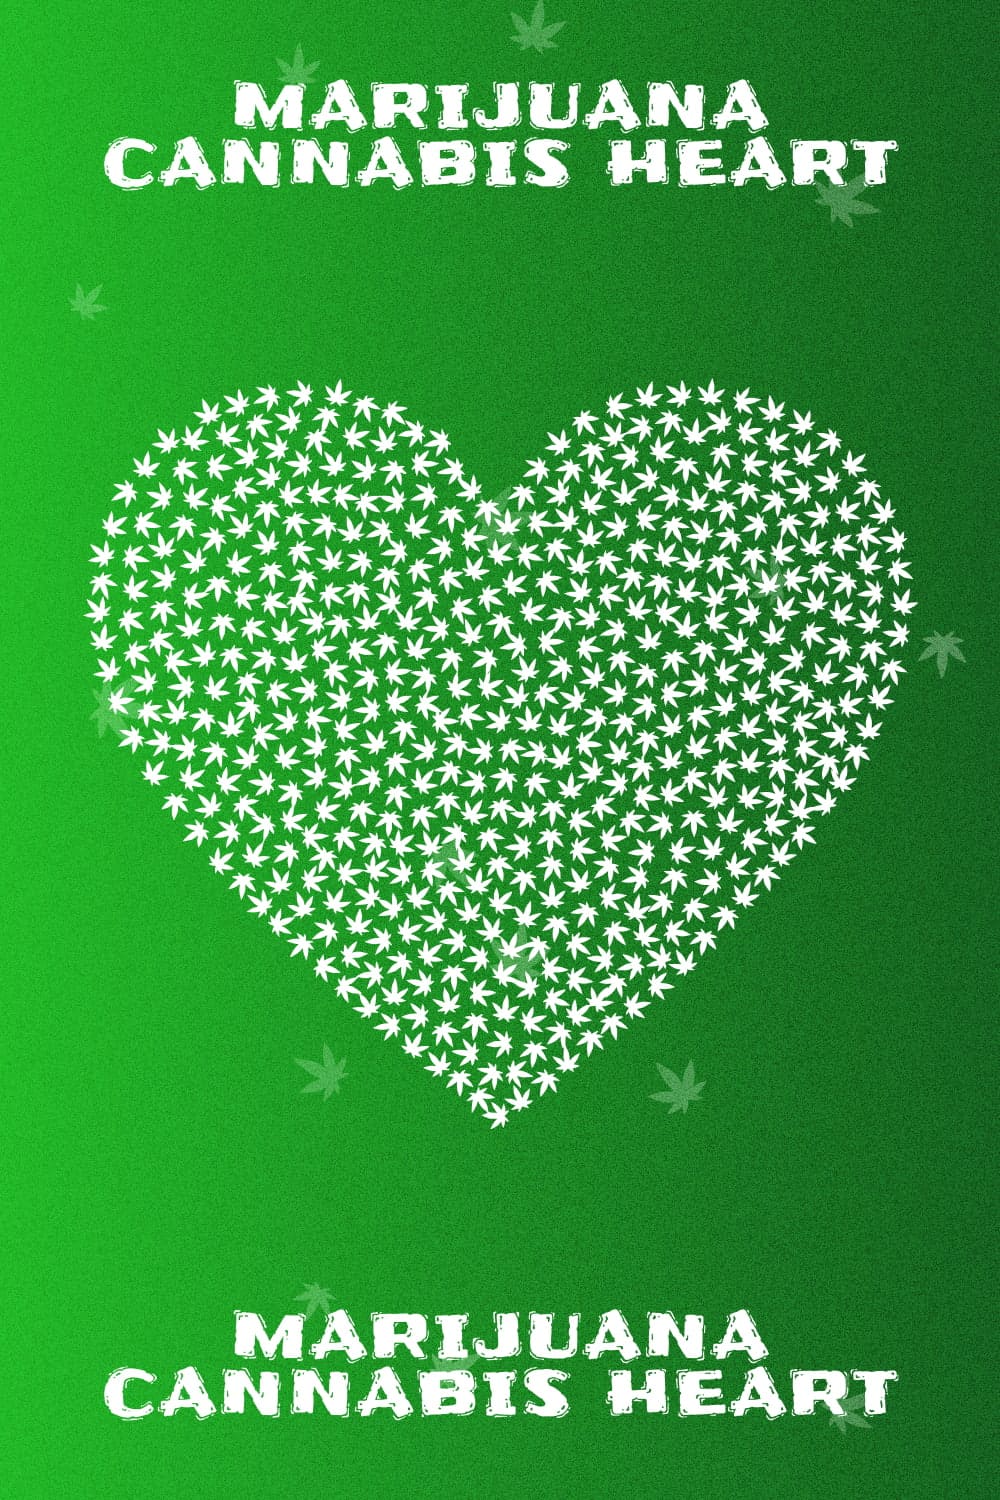 Marijuana Cannabis Heart - Pinterest image.